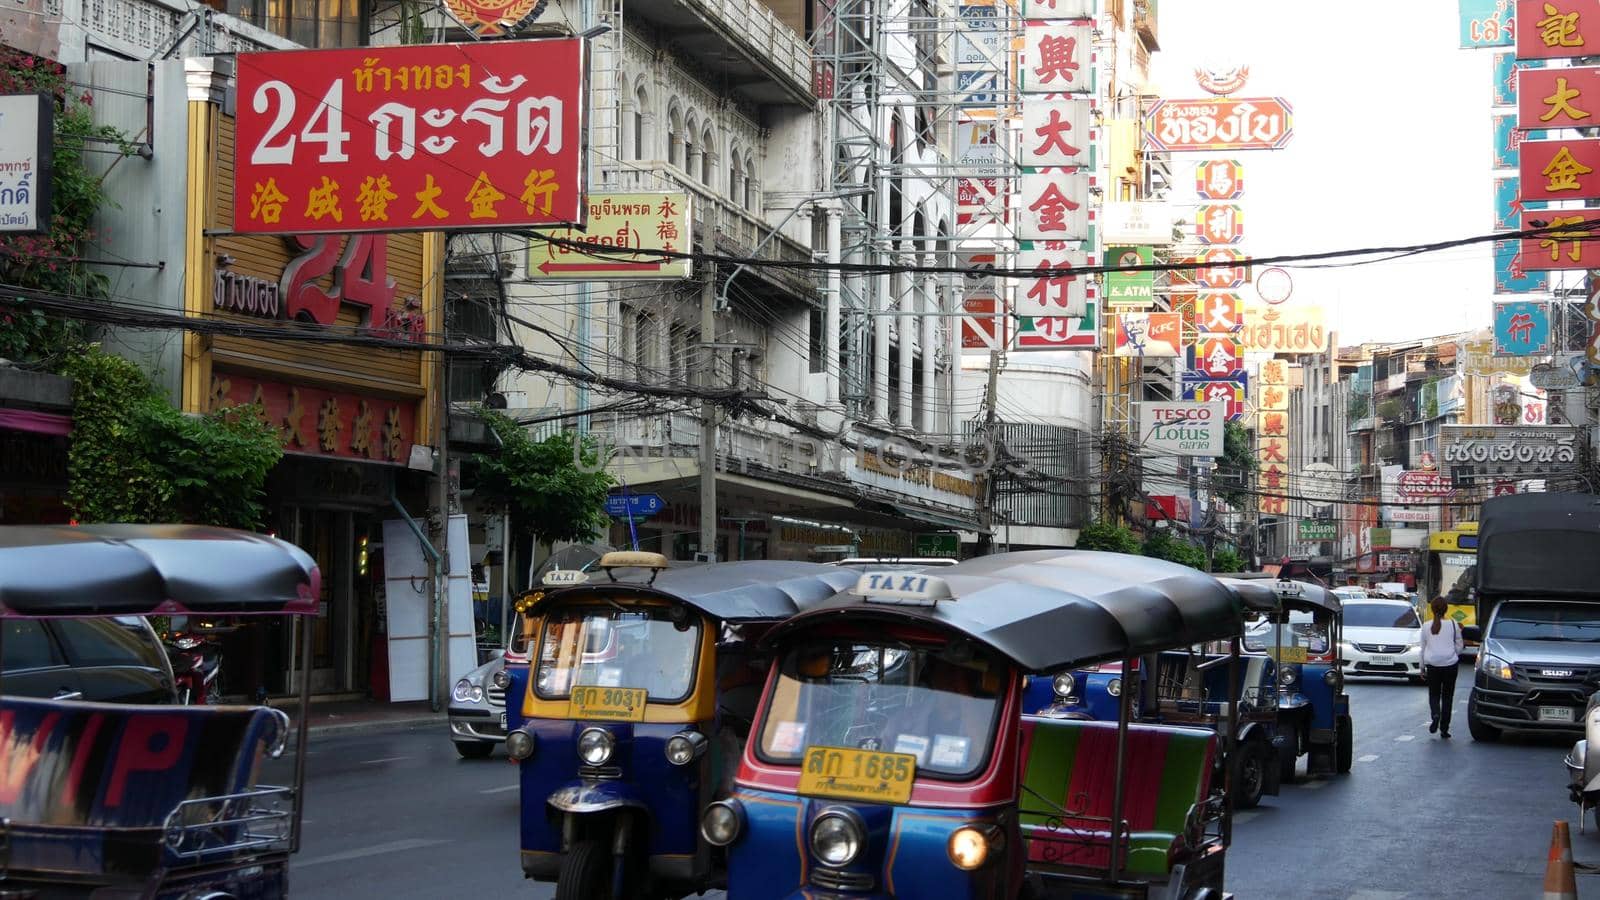 BANGKOK, THAILAND - 18 MARCH, 2019: Tuk tuks on street of Asian city. Colorful auto rickshaws riding on asphalt road on busy street of Chinatown in Bangkok